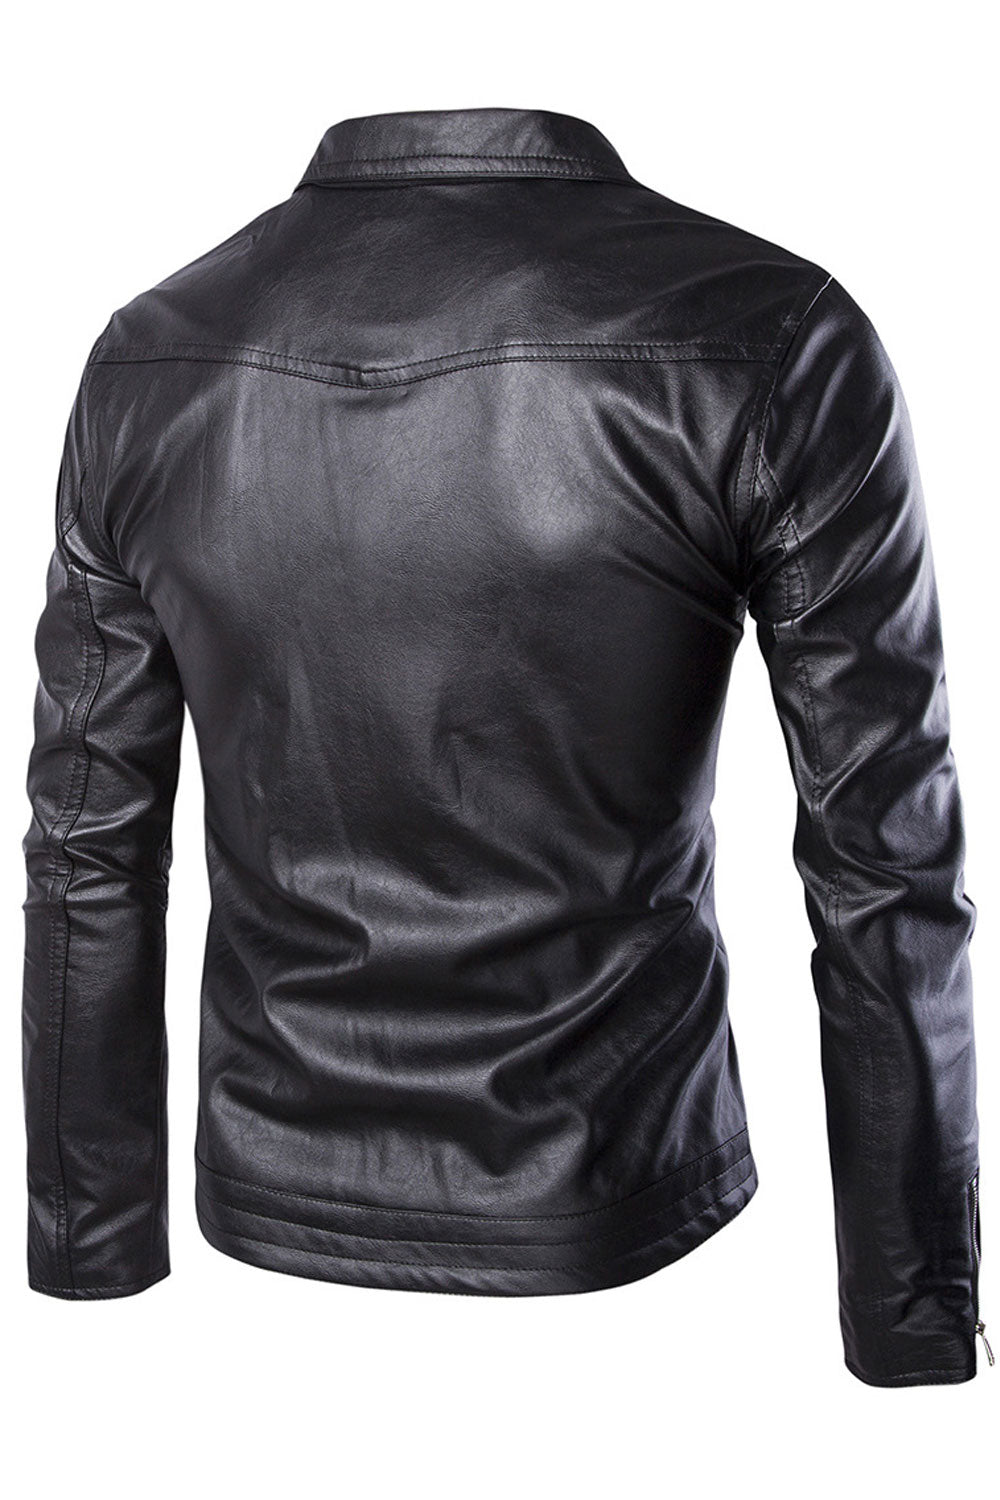 Men Thick Side Zipper Leather Jacket - C4387KMJK